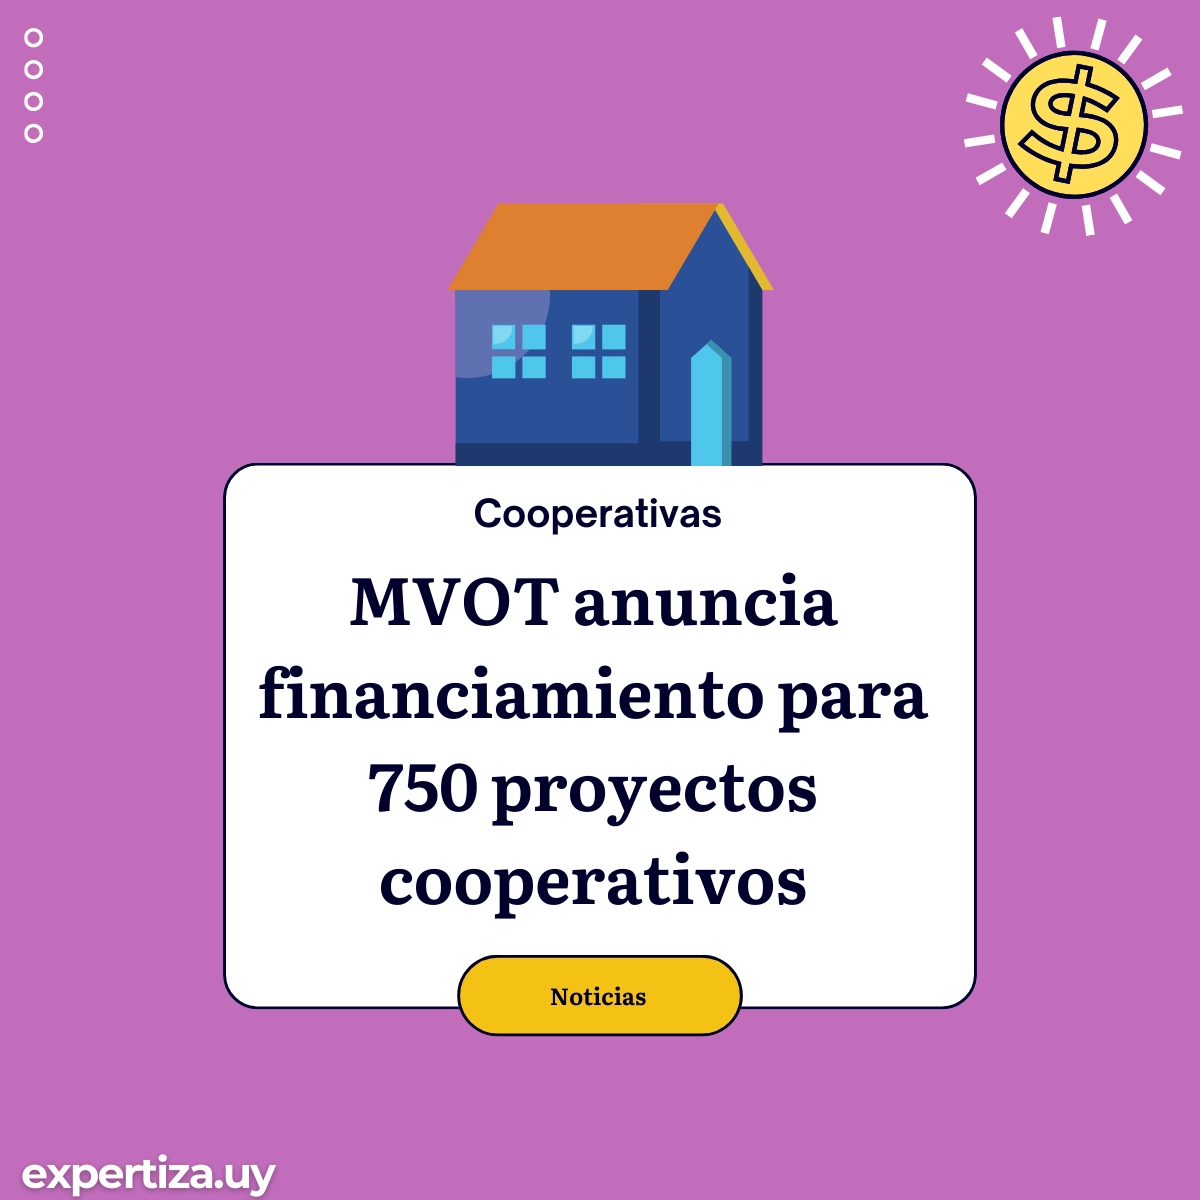 MVOT anuncia financiamiento para 750 proyectos cooperativos.